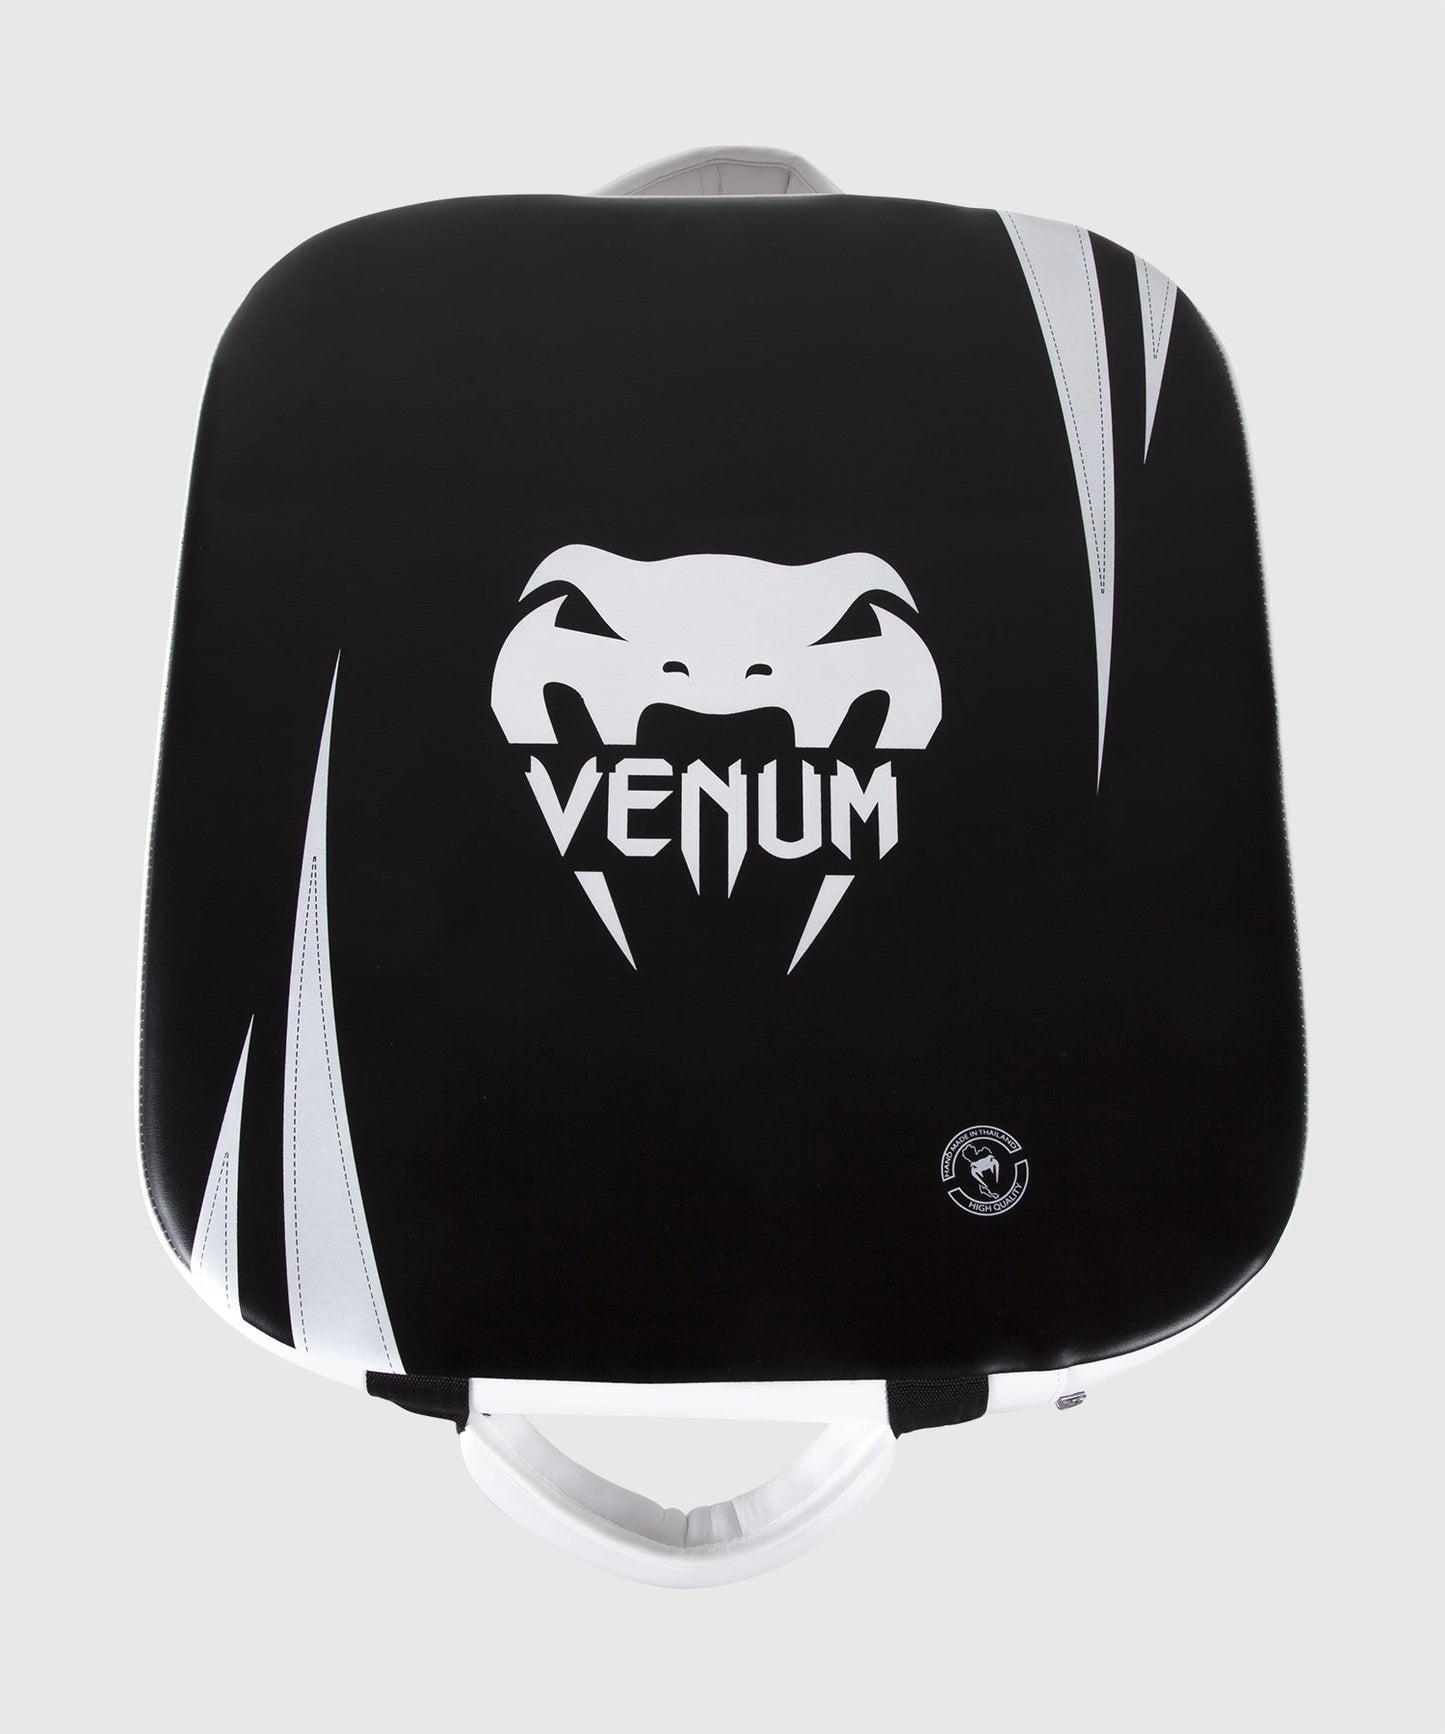 Escudo para patadas Venum Absolute Square - Cuero Skintex - Negro/Blanco